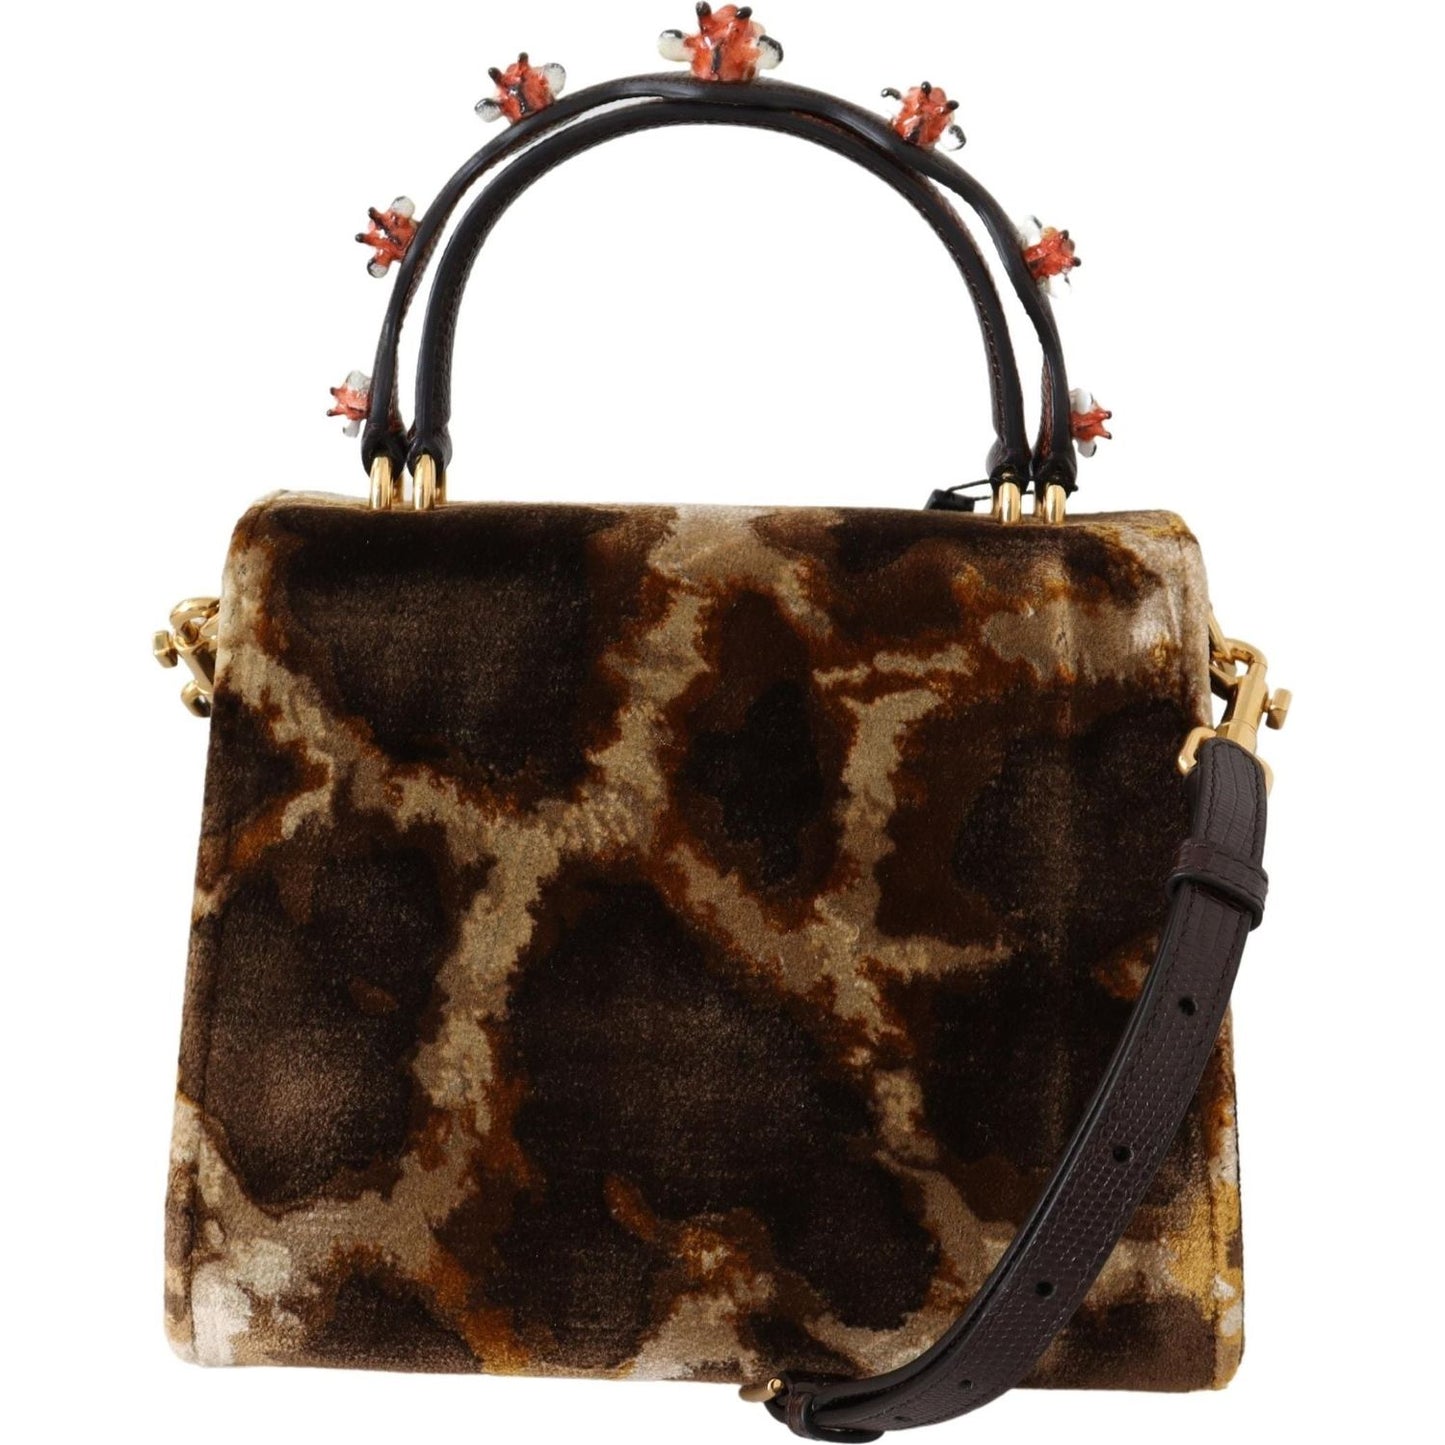 Dolce & Gabbana Elegant Giraffe Pattern Welcome Bag with Gold Accents brown-giraffe-crossbody-purse-borse-welcome-purse IMG_2376-b929b94a-545.jpg